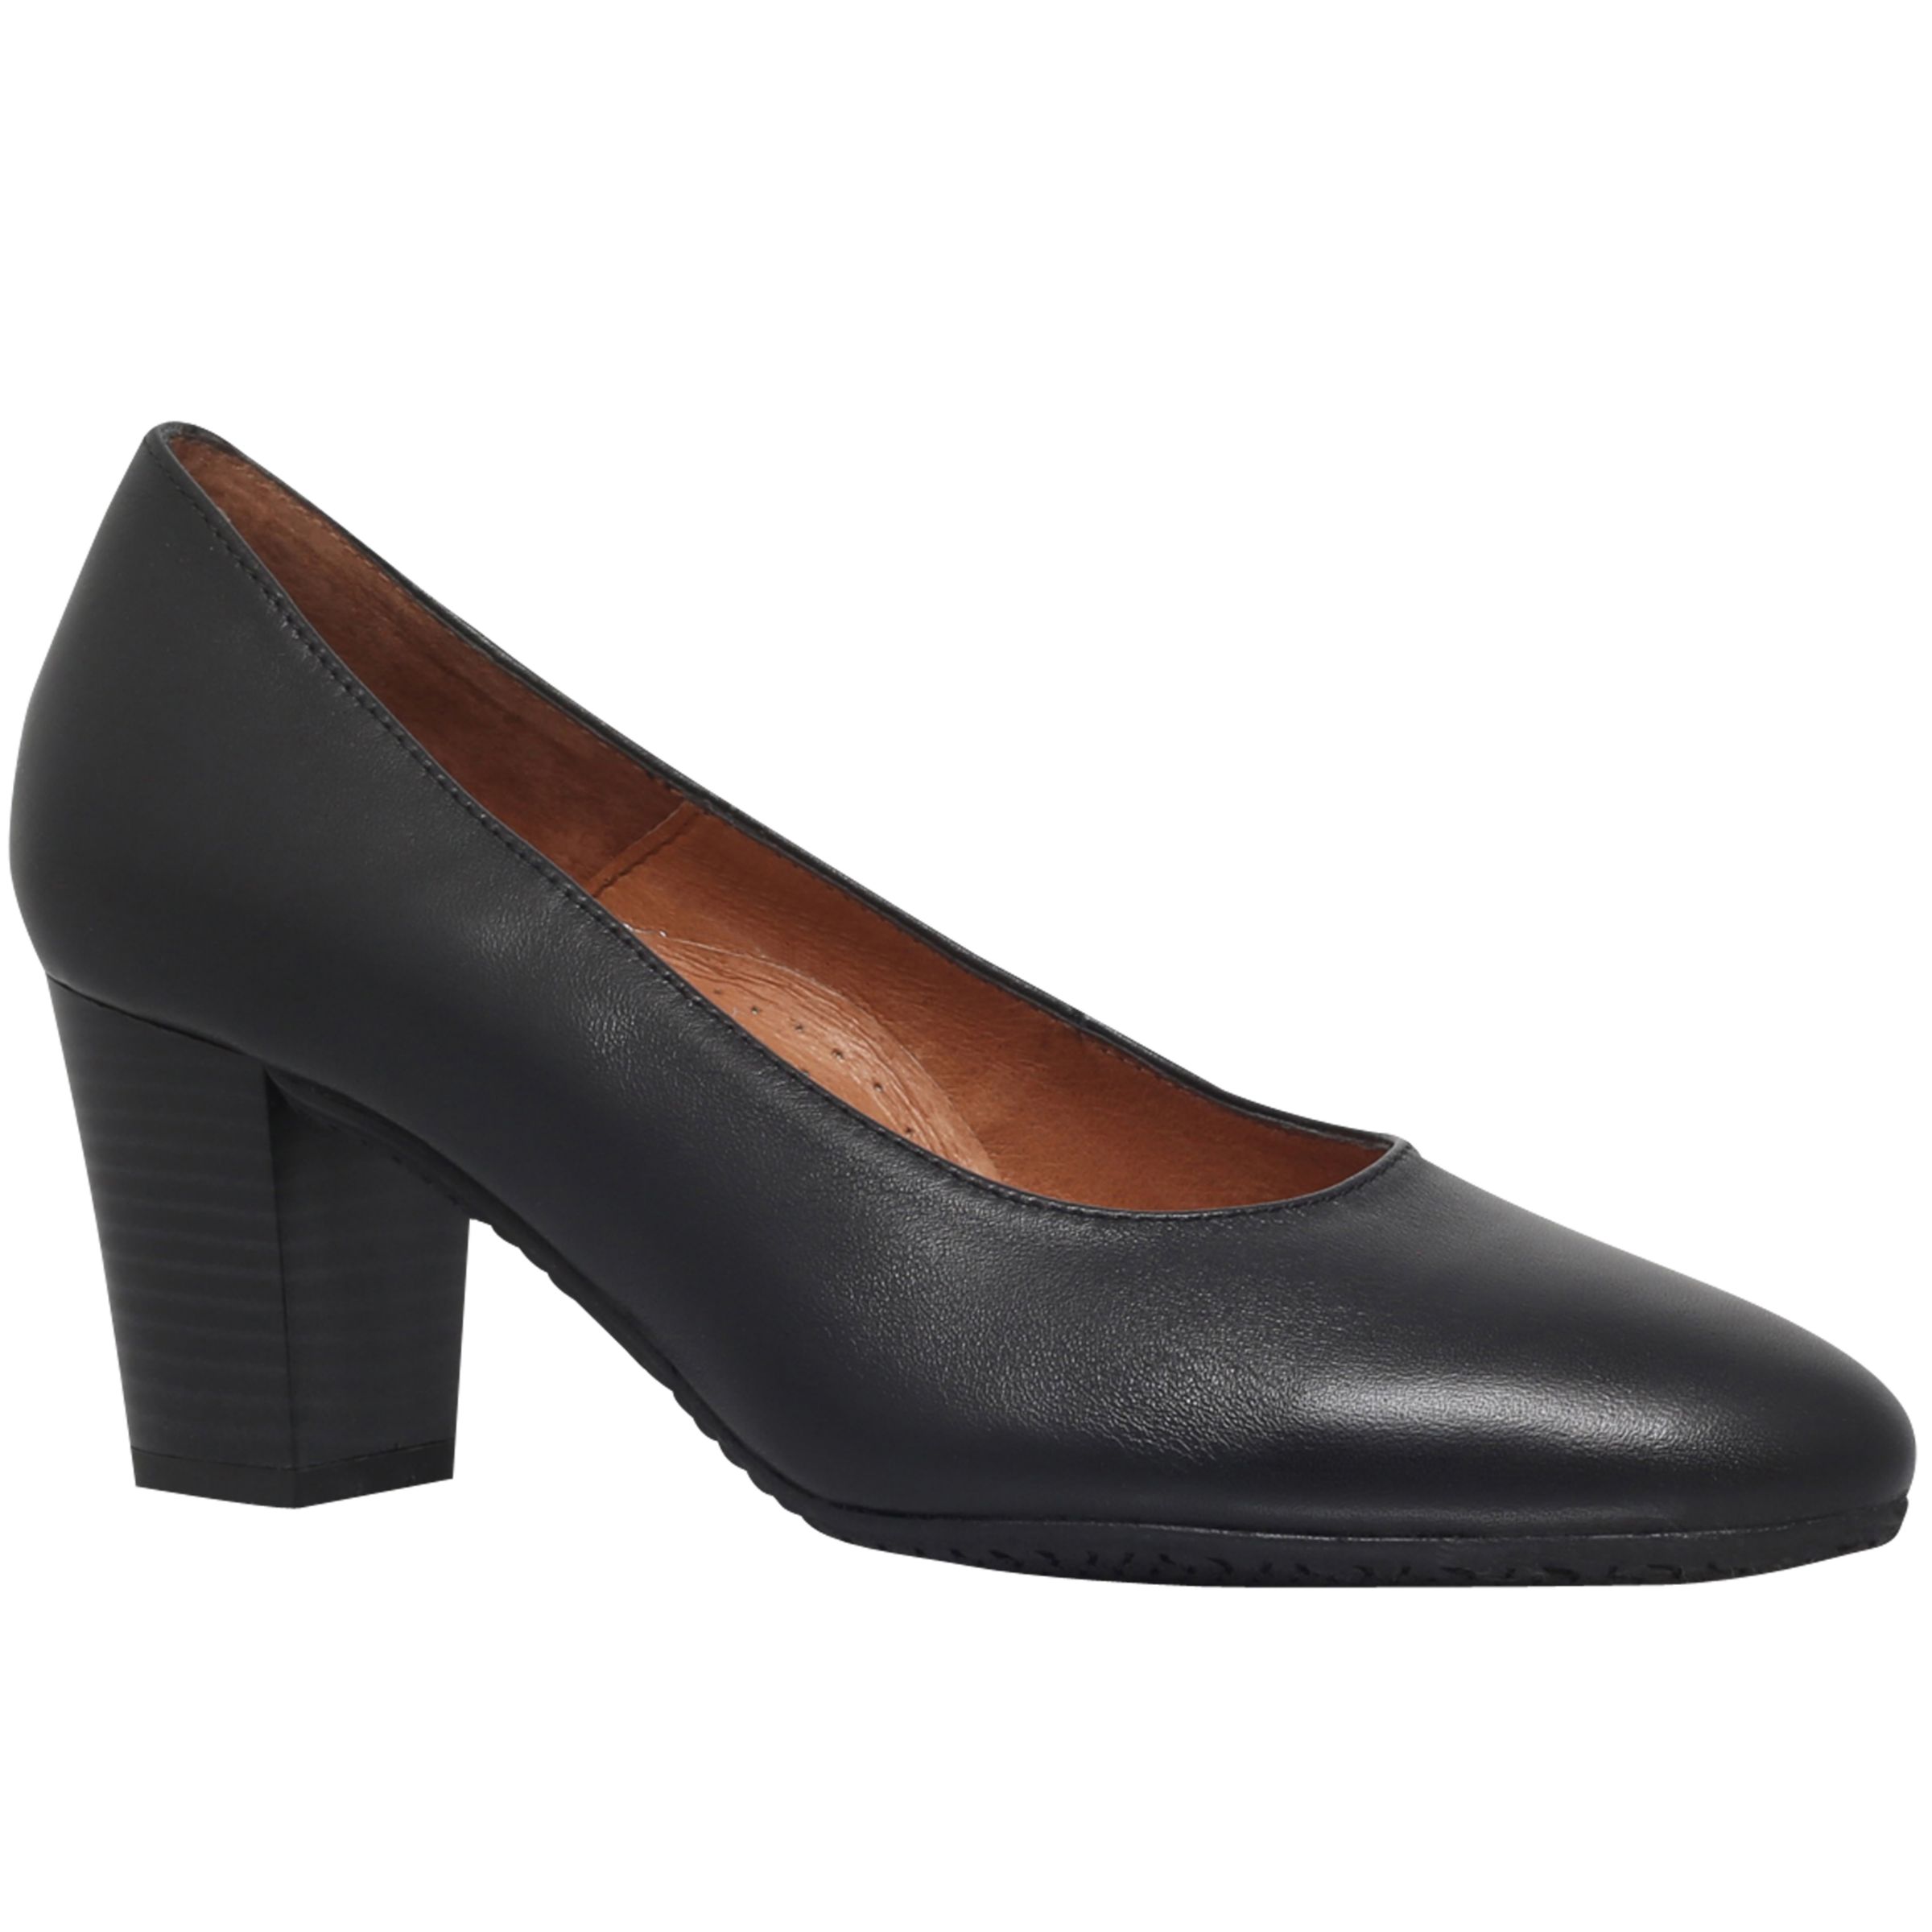 Carvela Comfort Air Block Heeled Court Shoes, Black, 8